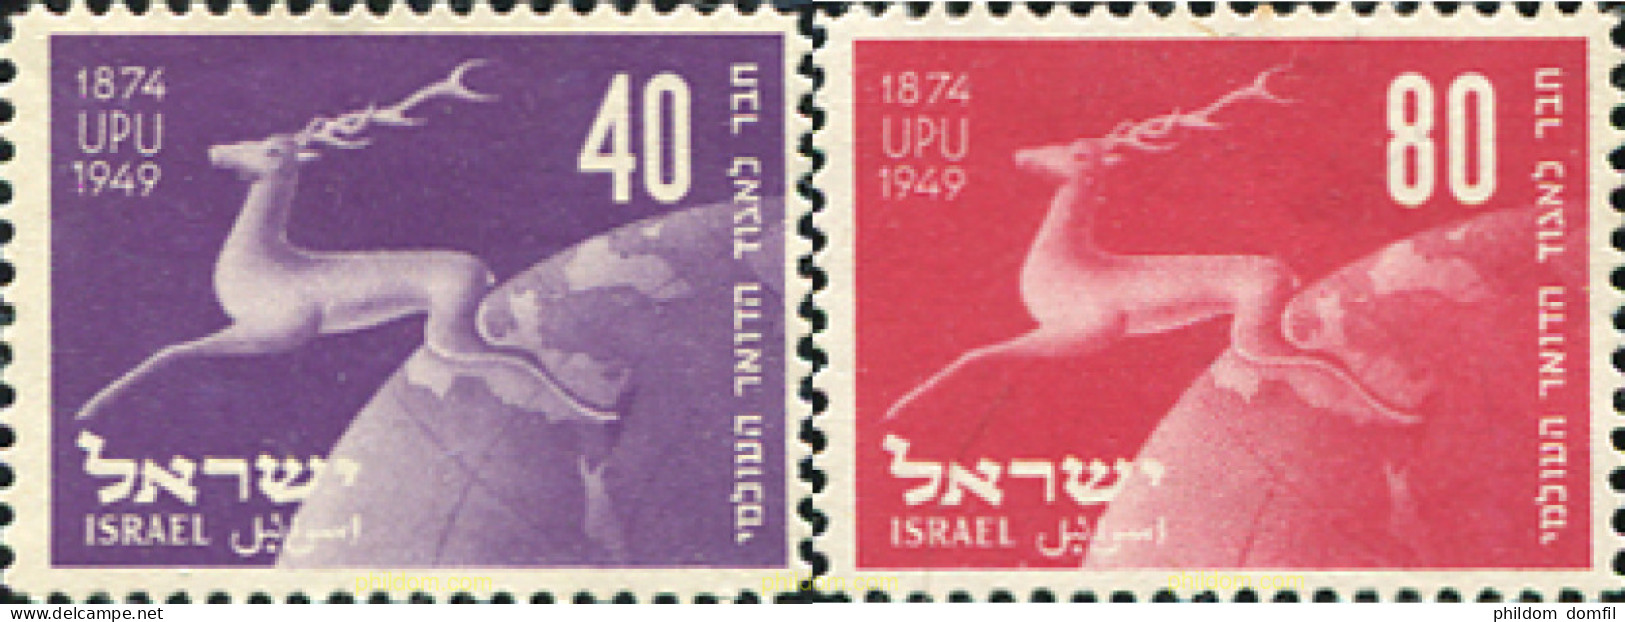 79291 MNH ISRAEL 1950 75 ANIVERSARIO DE LA UPU - Unused Stamps (without Tabs)